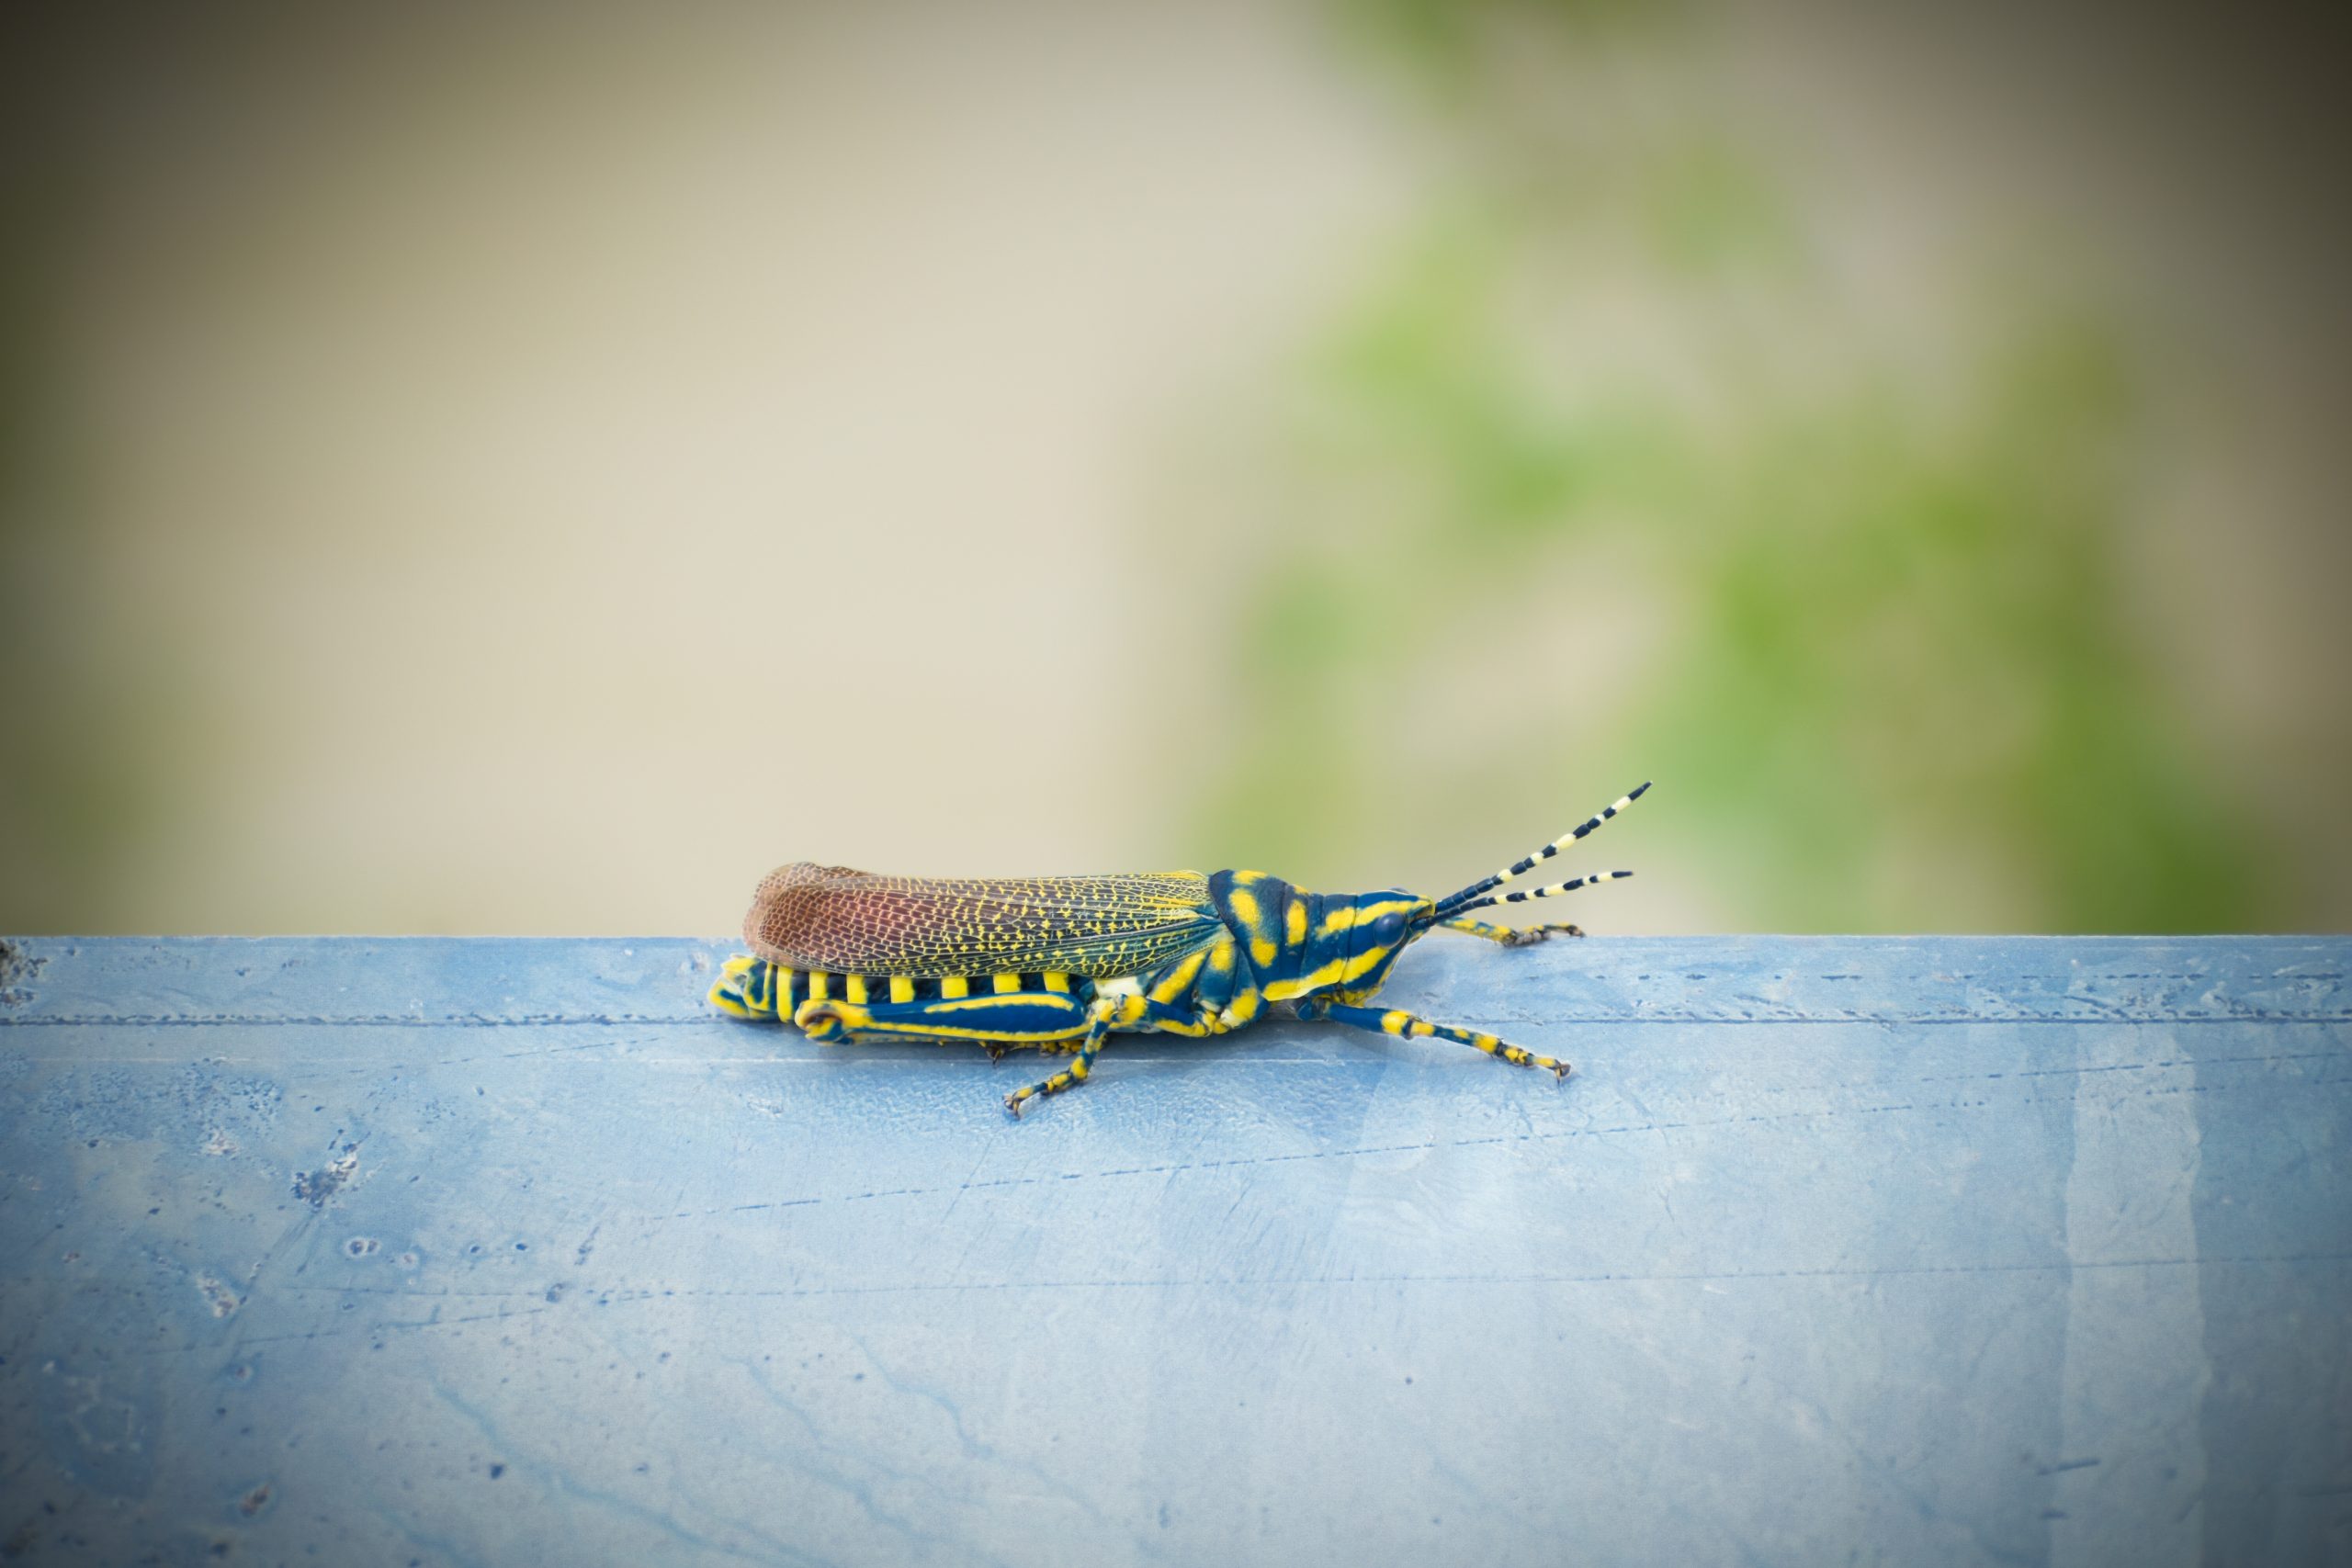 Blue striped grasshopper